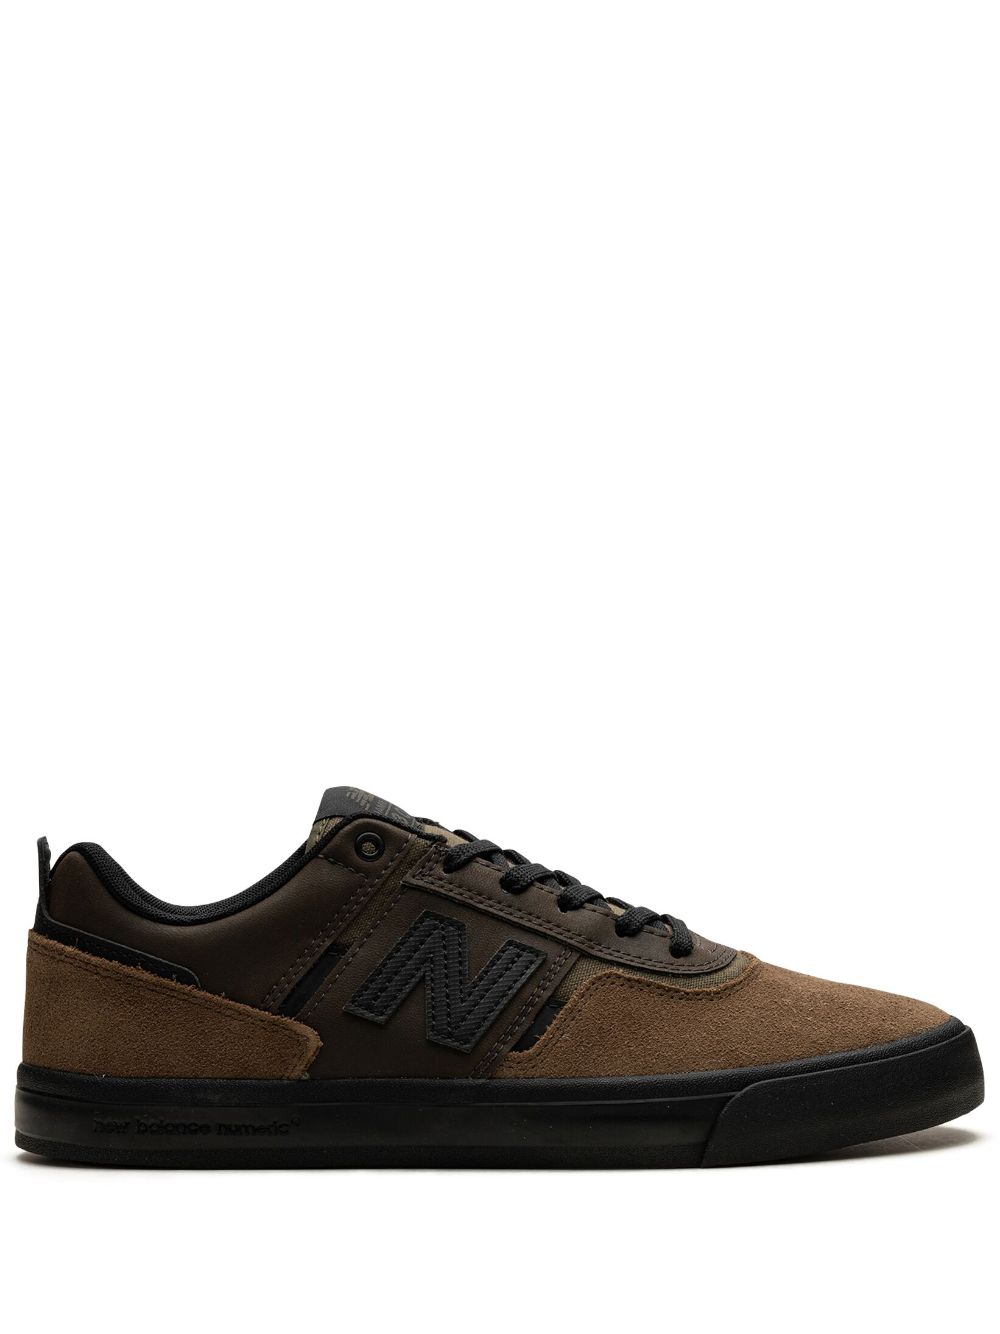 New Balance x Jamie Foy Numeric 306 "Brown/Black" sneakers